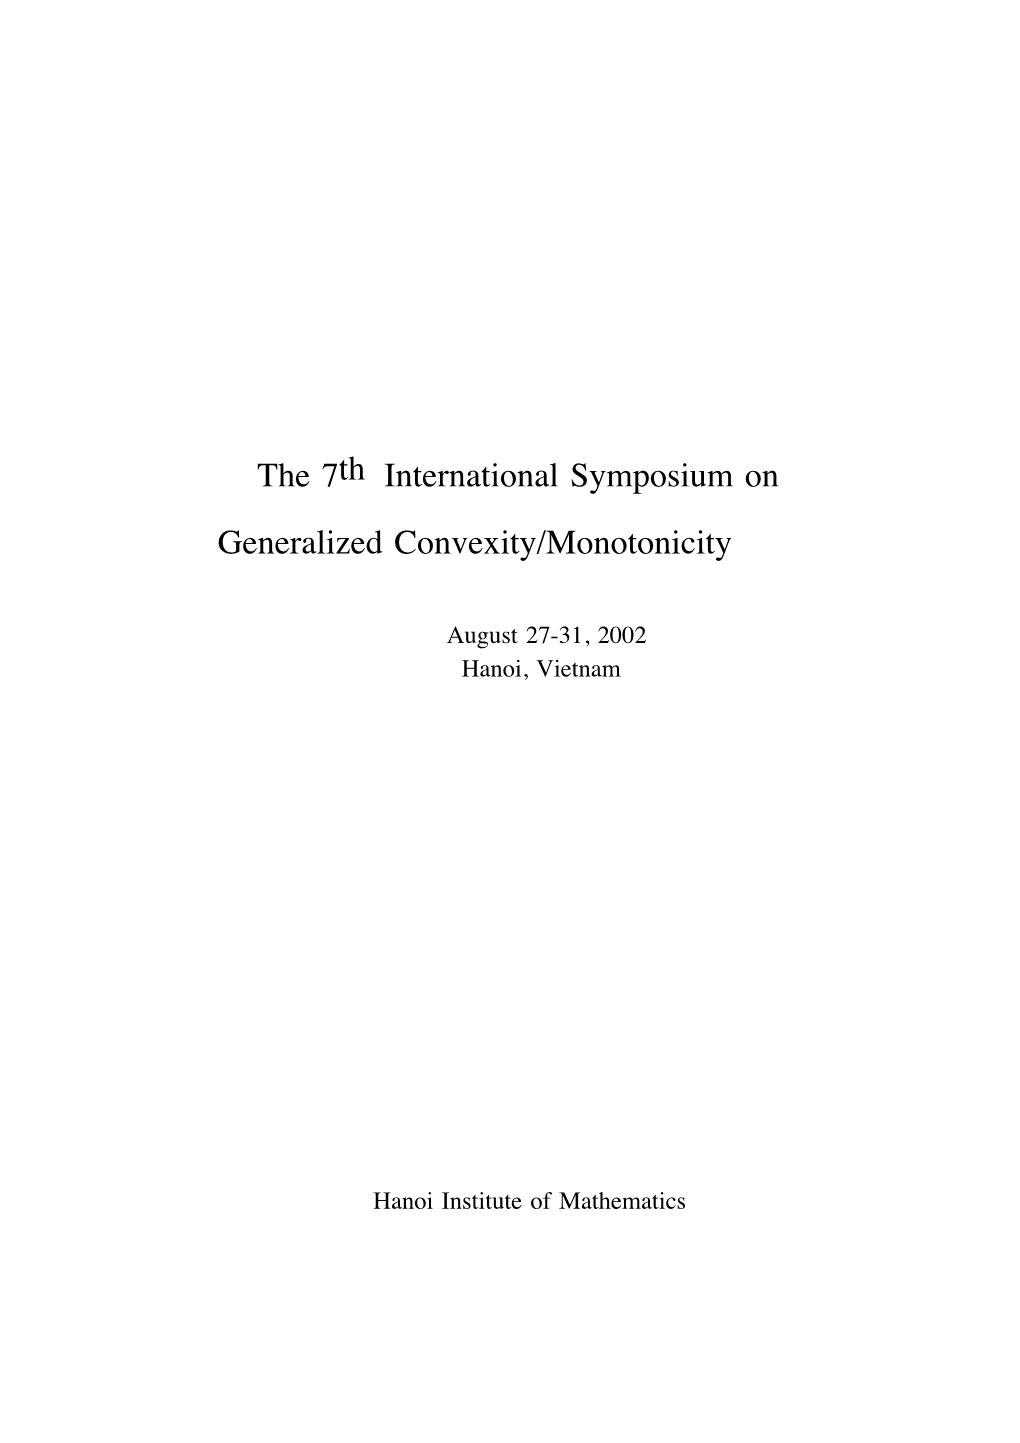 The 7Thinternational Symposium on Generalized Convexity/Monotonicity